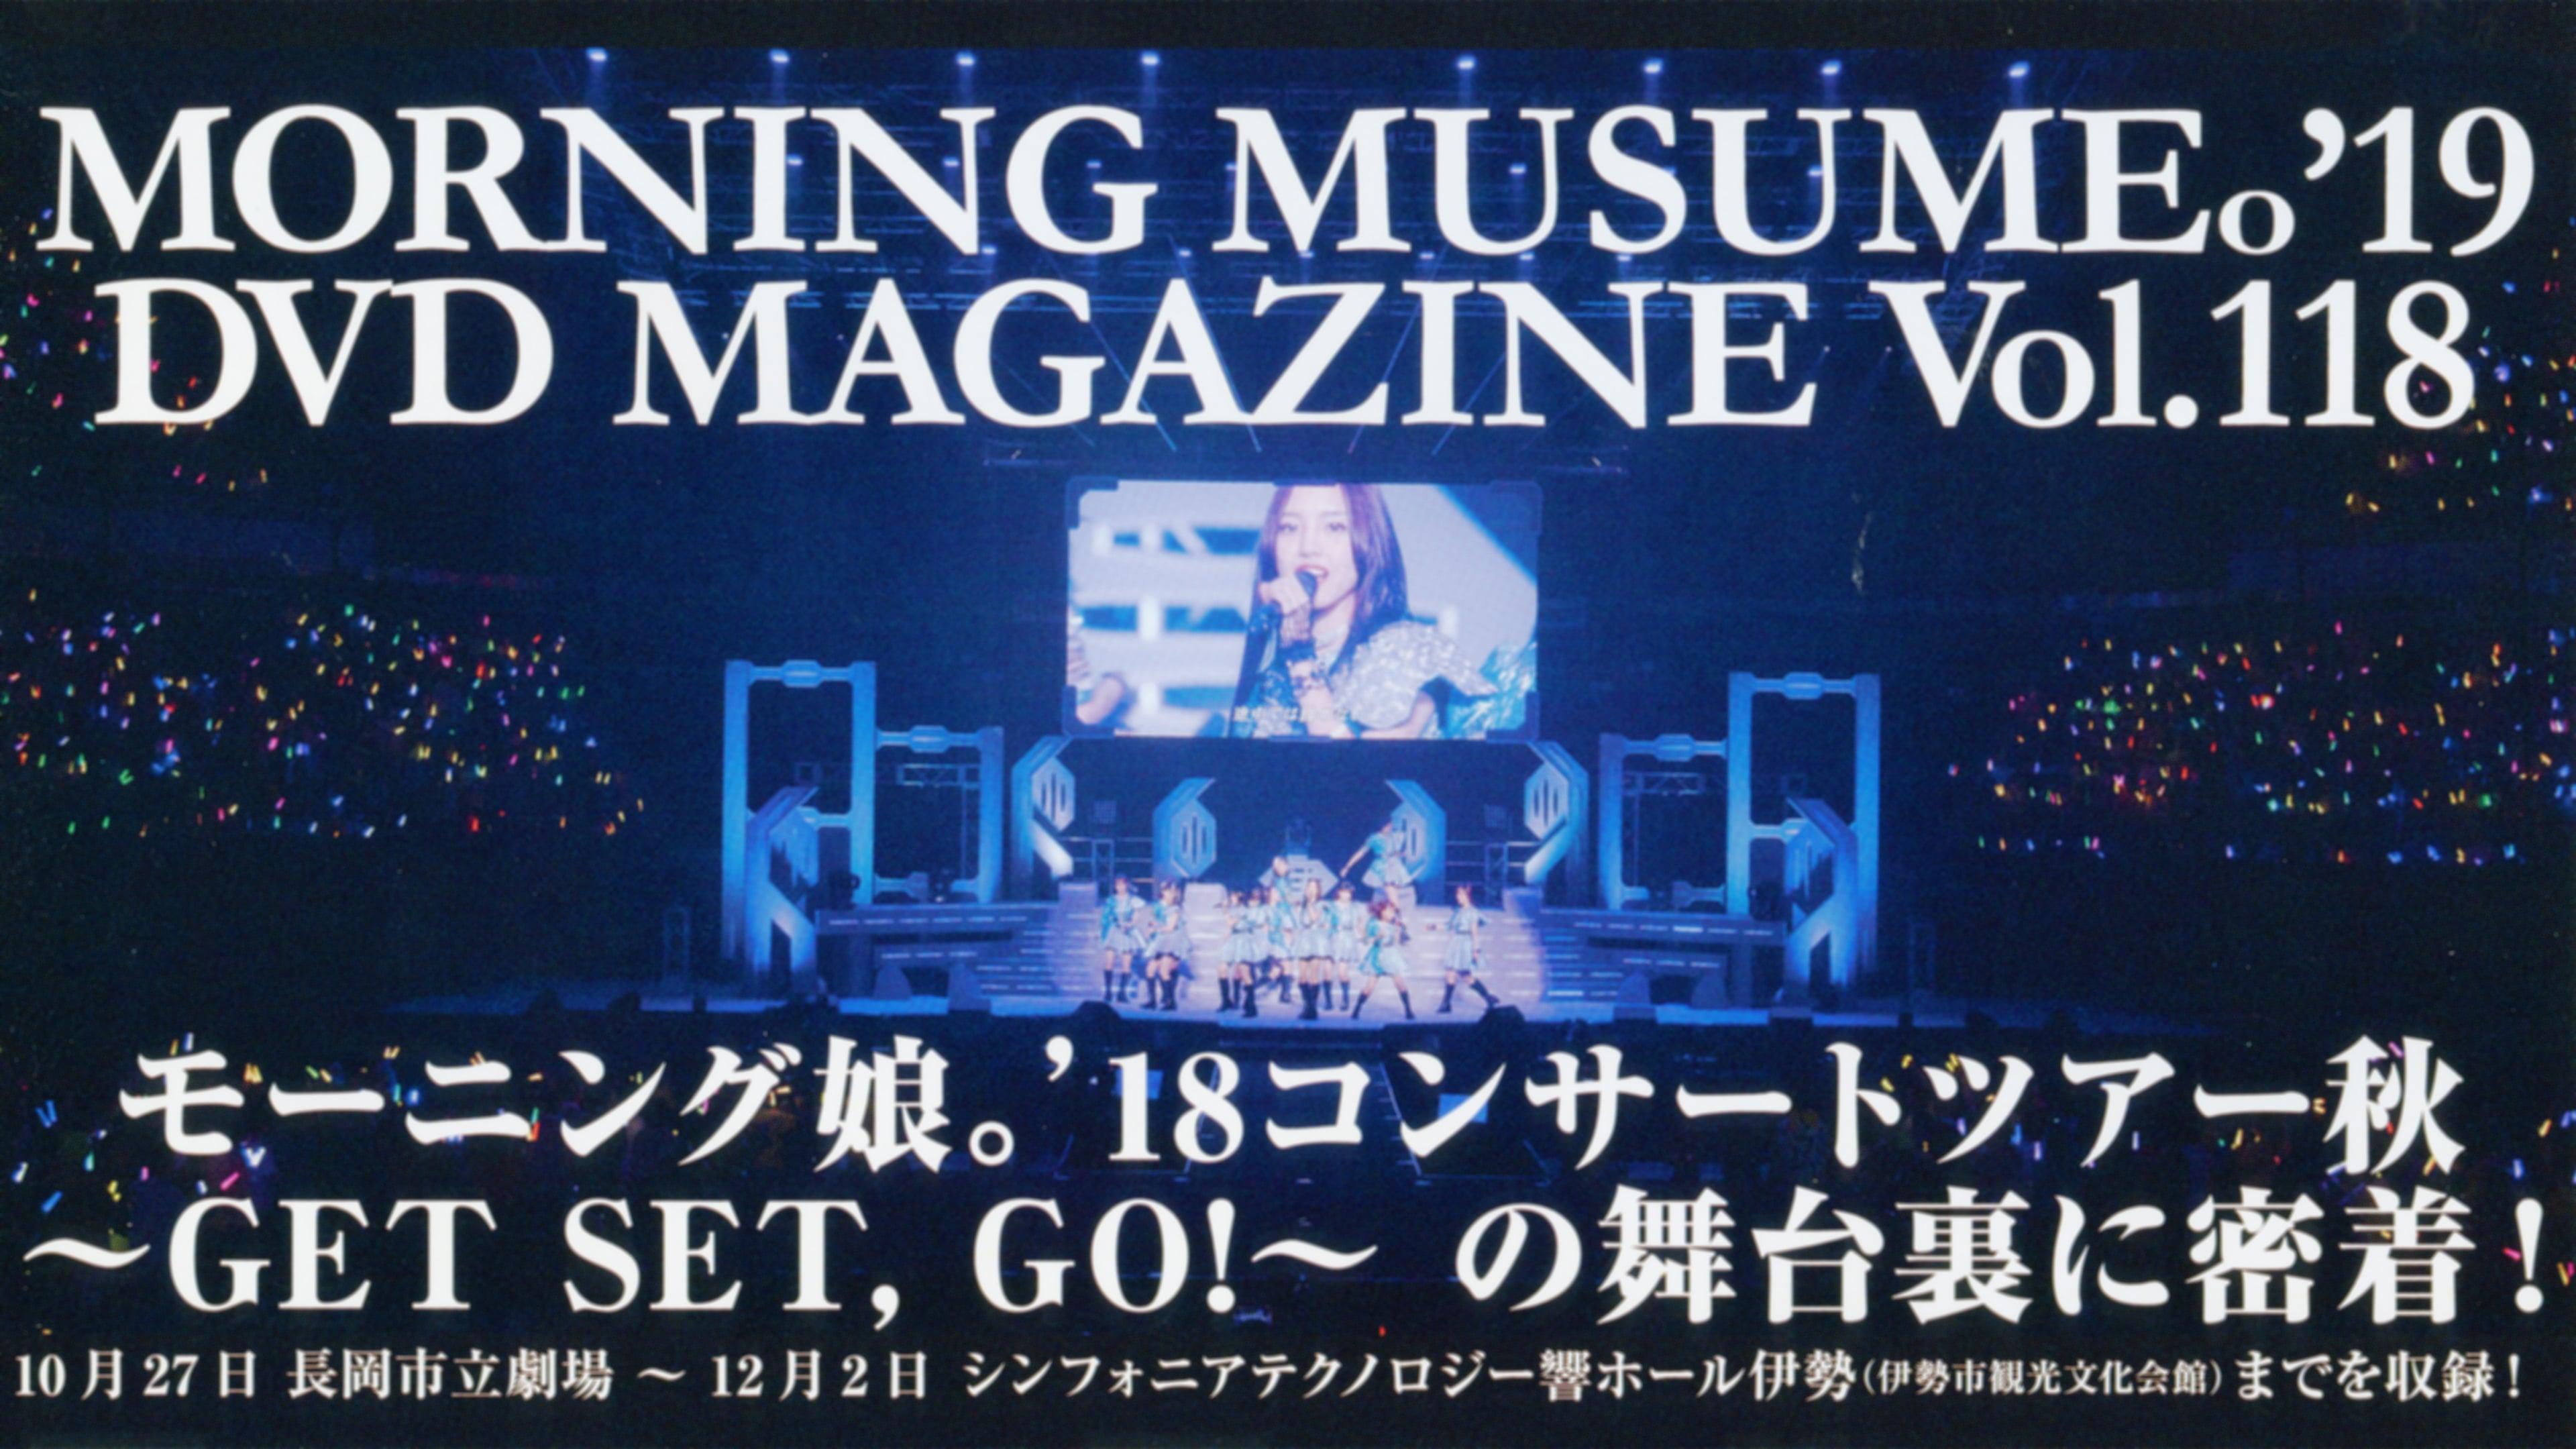 Morning Musume.'19 DVD Magazine Vol.118 backdrop